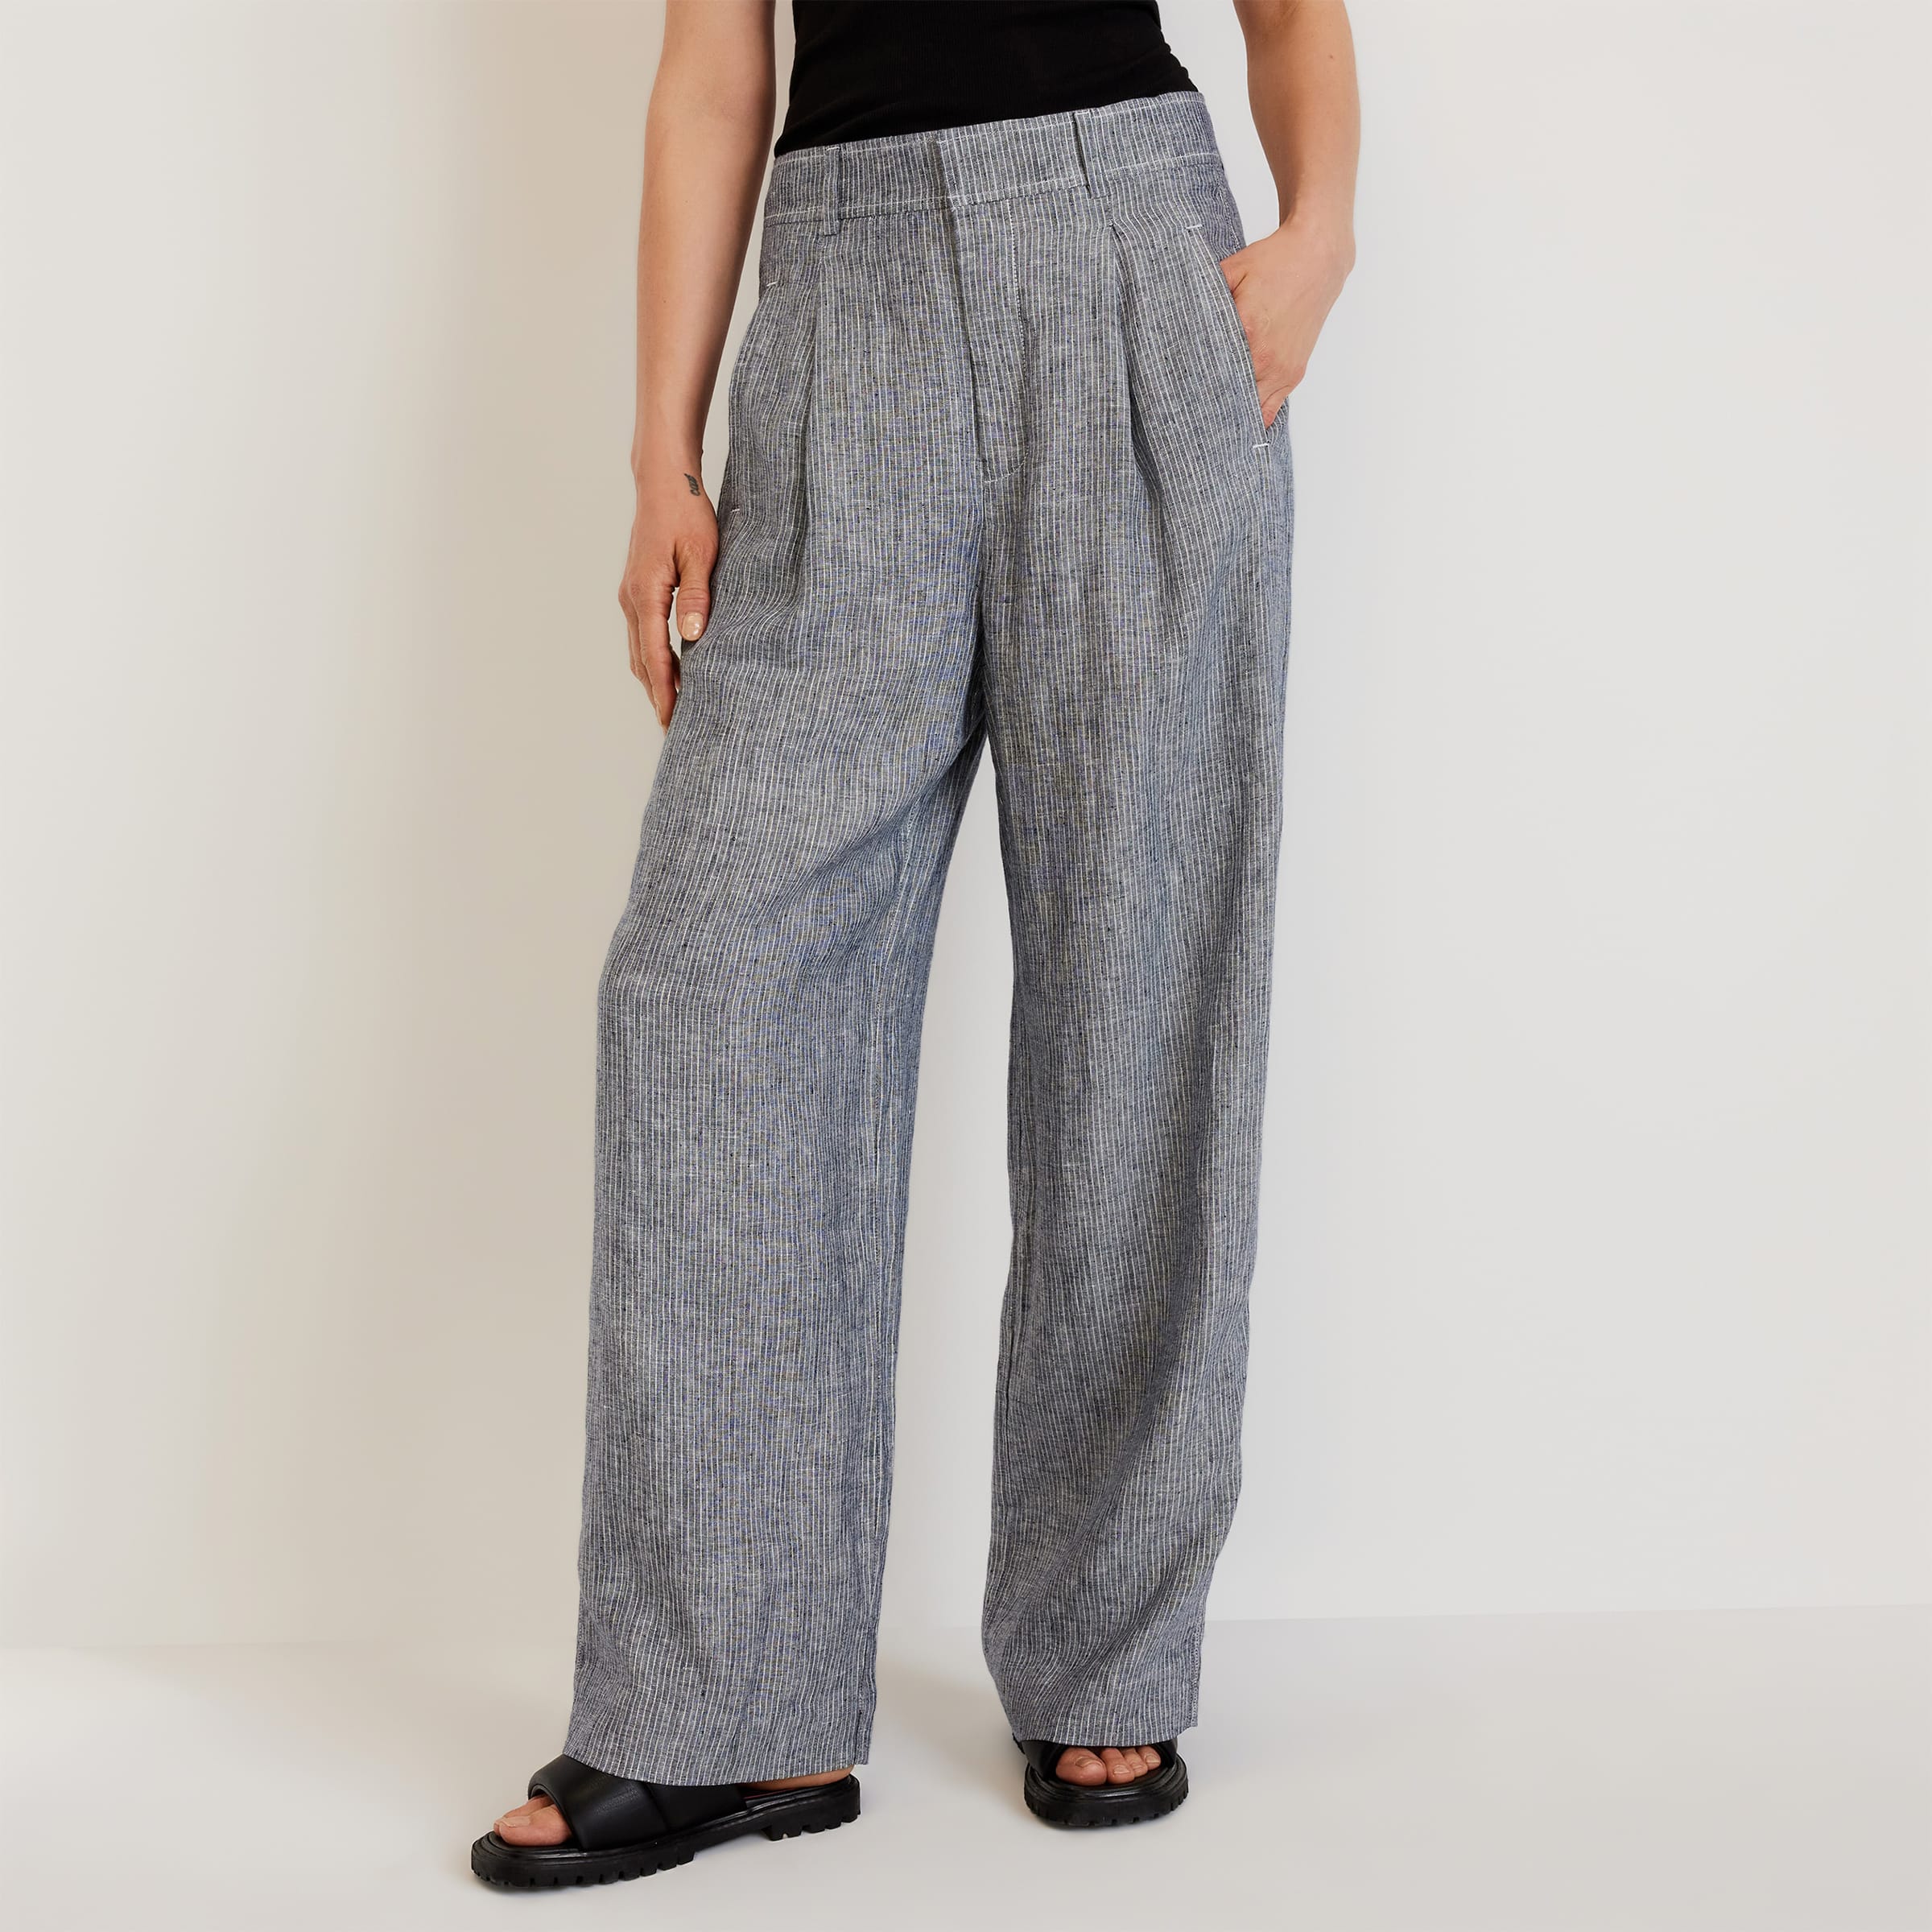 Women's Comfy Pajama Pants,Casual Stretch Pant, Strip USA Flag